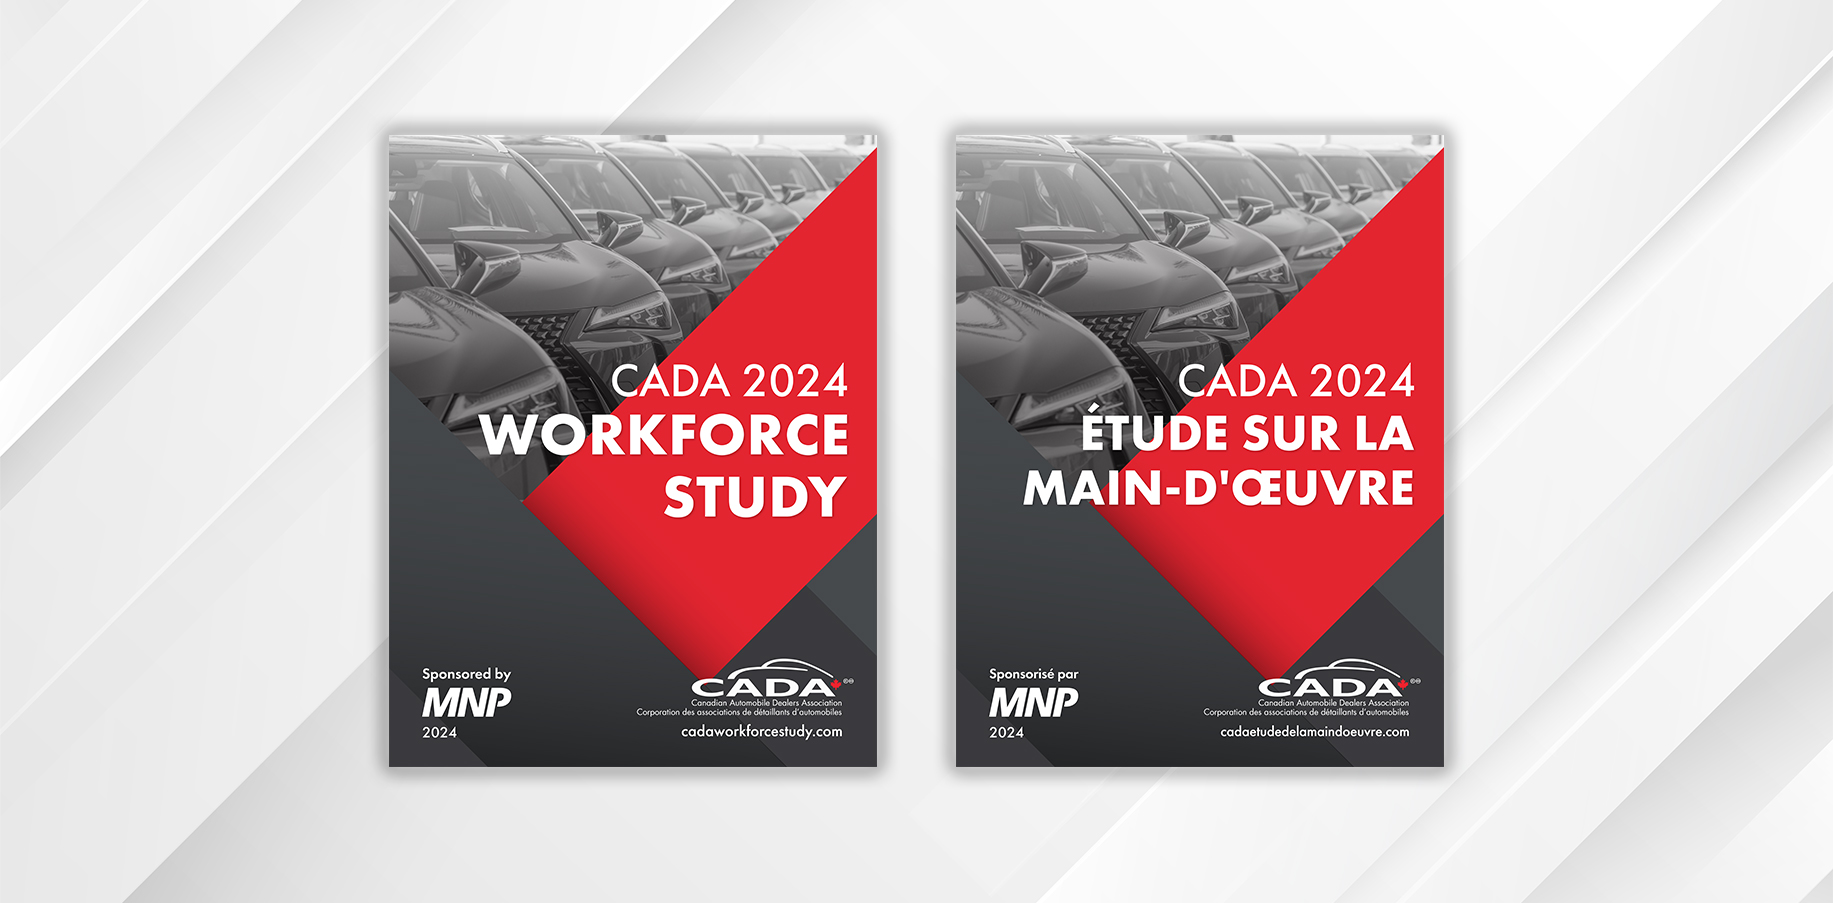 Participating dealers get custom CADA Workforce reports